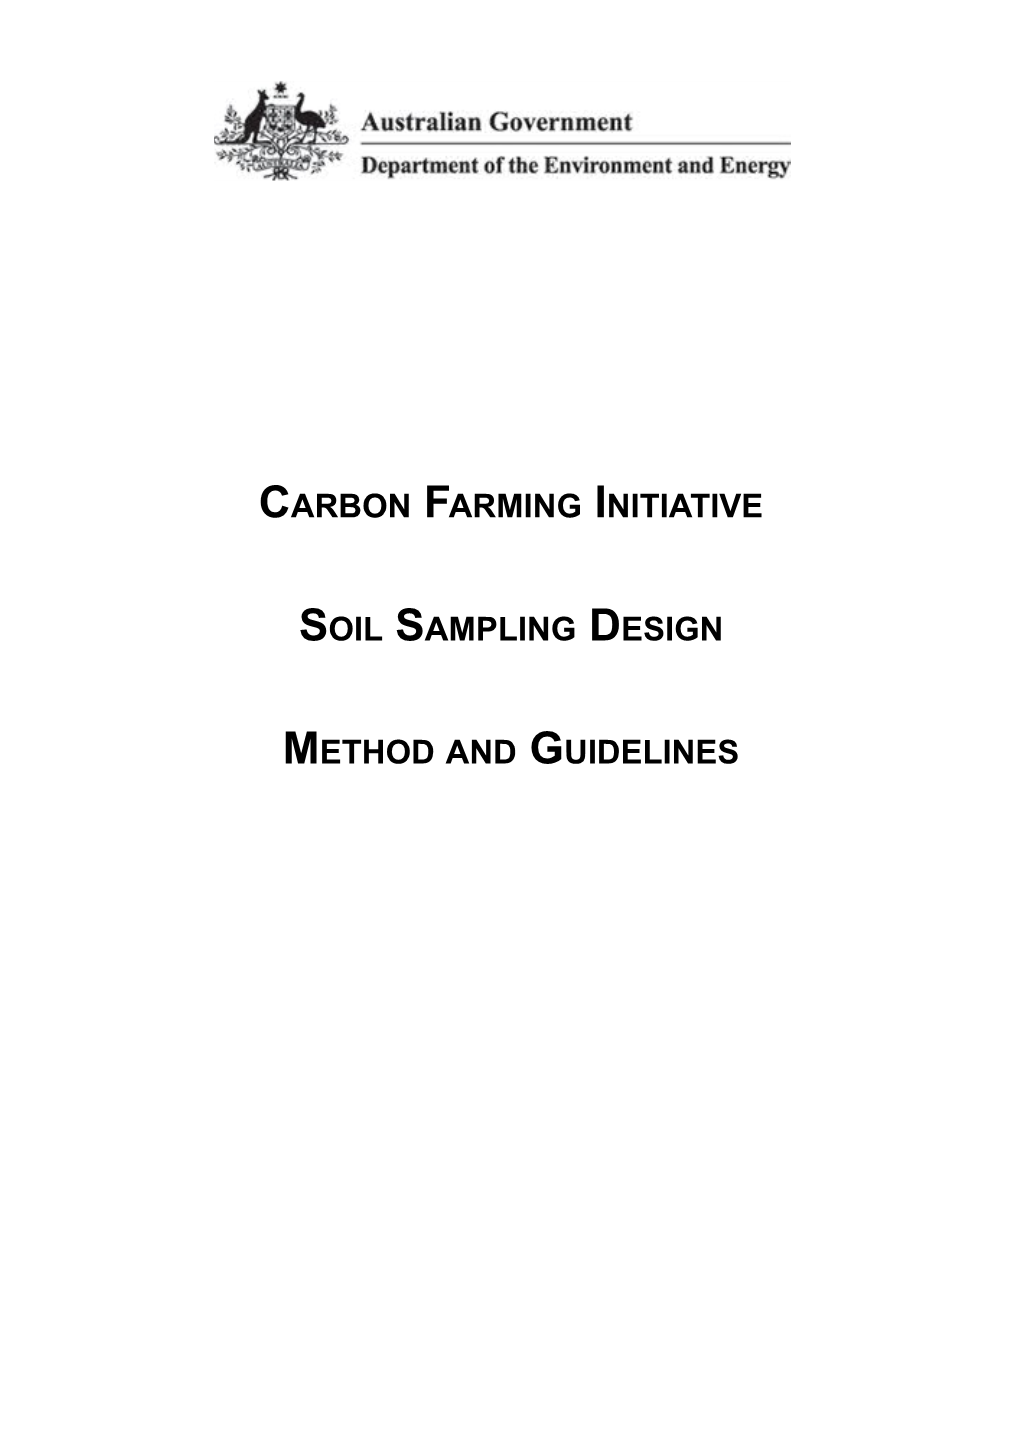 Carbon Farming Initiative - Soil Sampling Design Method and Guidelines